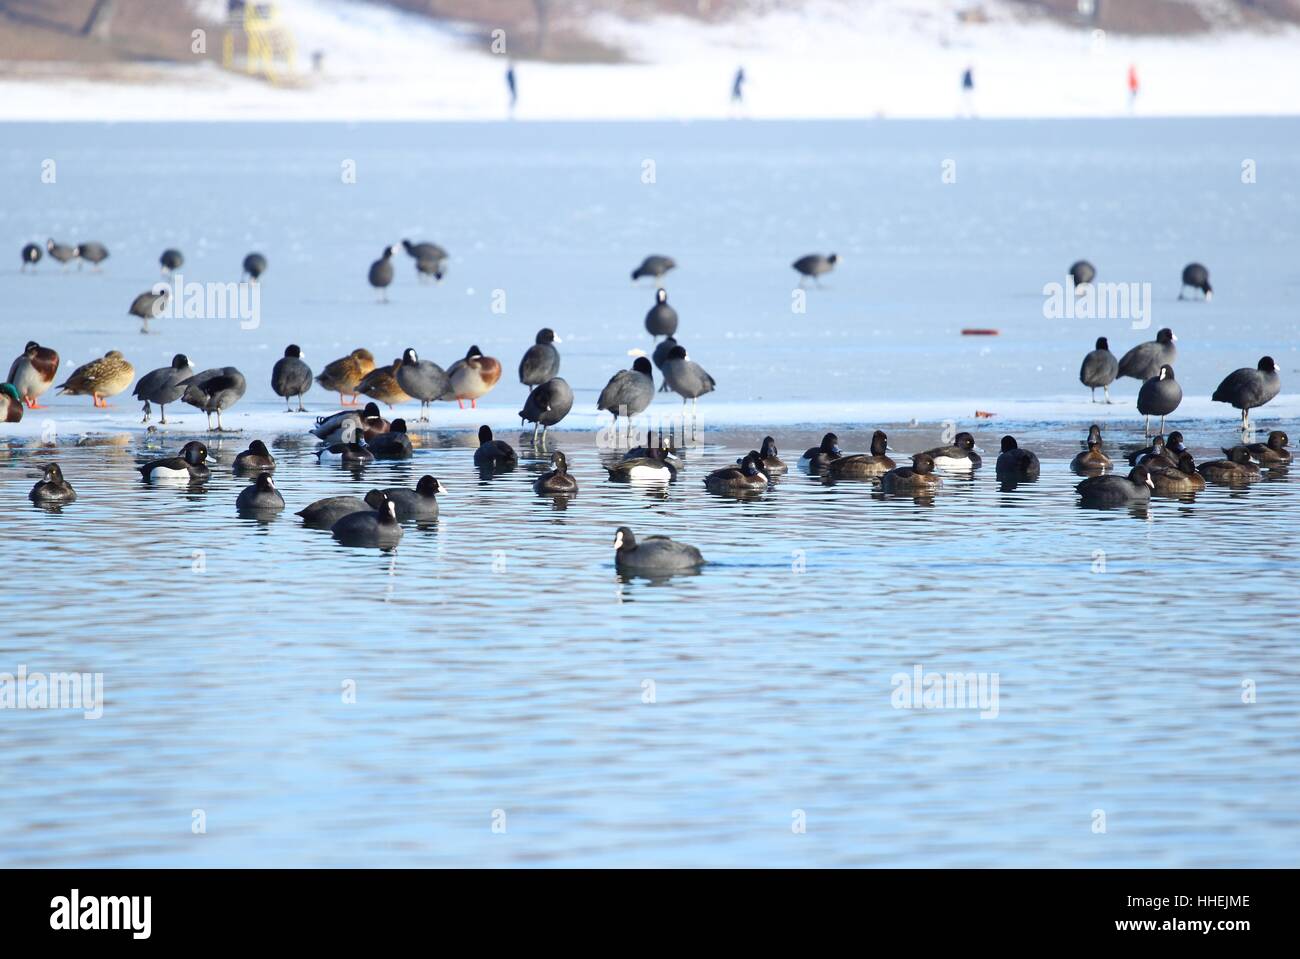 Water birds on frozen lake Jarun in Zagreb, Croatia Stock Photo